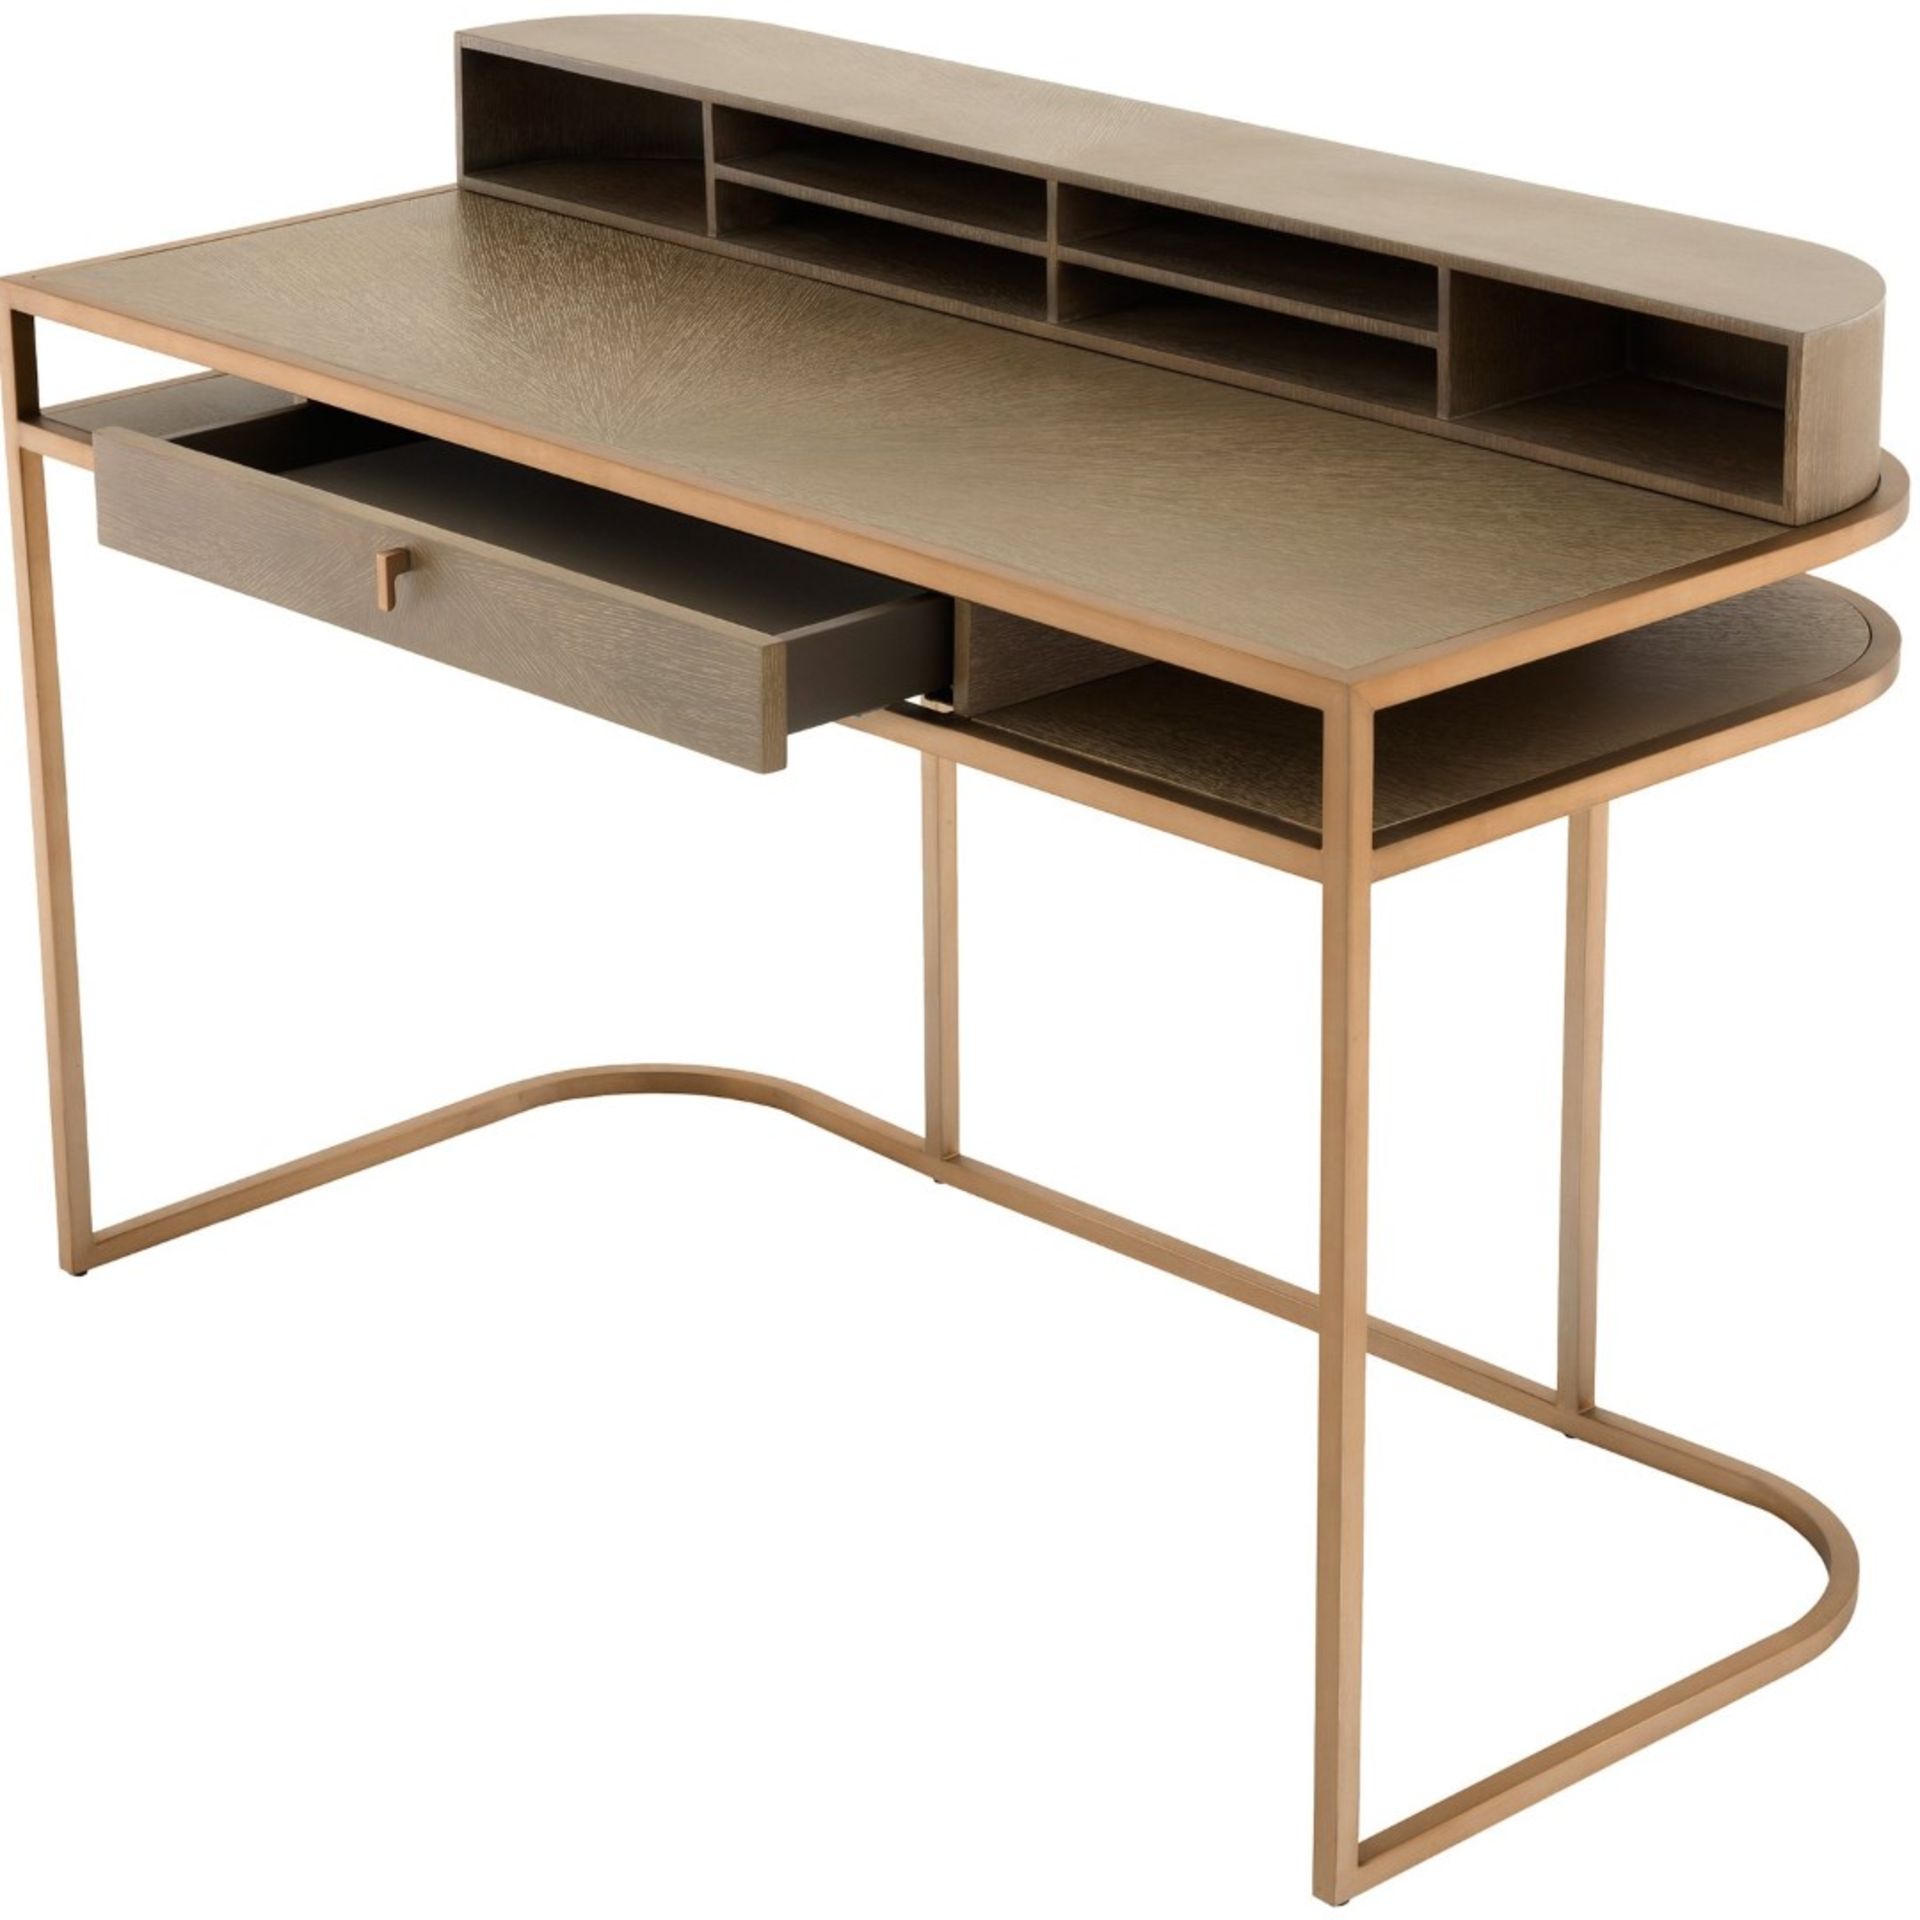 1 x EICHHOLTZ 'Highland' Designer Desk With Washed Oak And Brushed Brass Finishes - Ex-Display - - Image 3 of 12